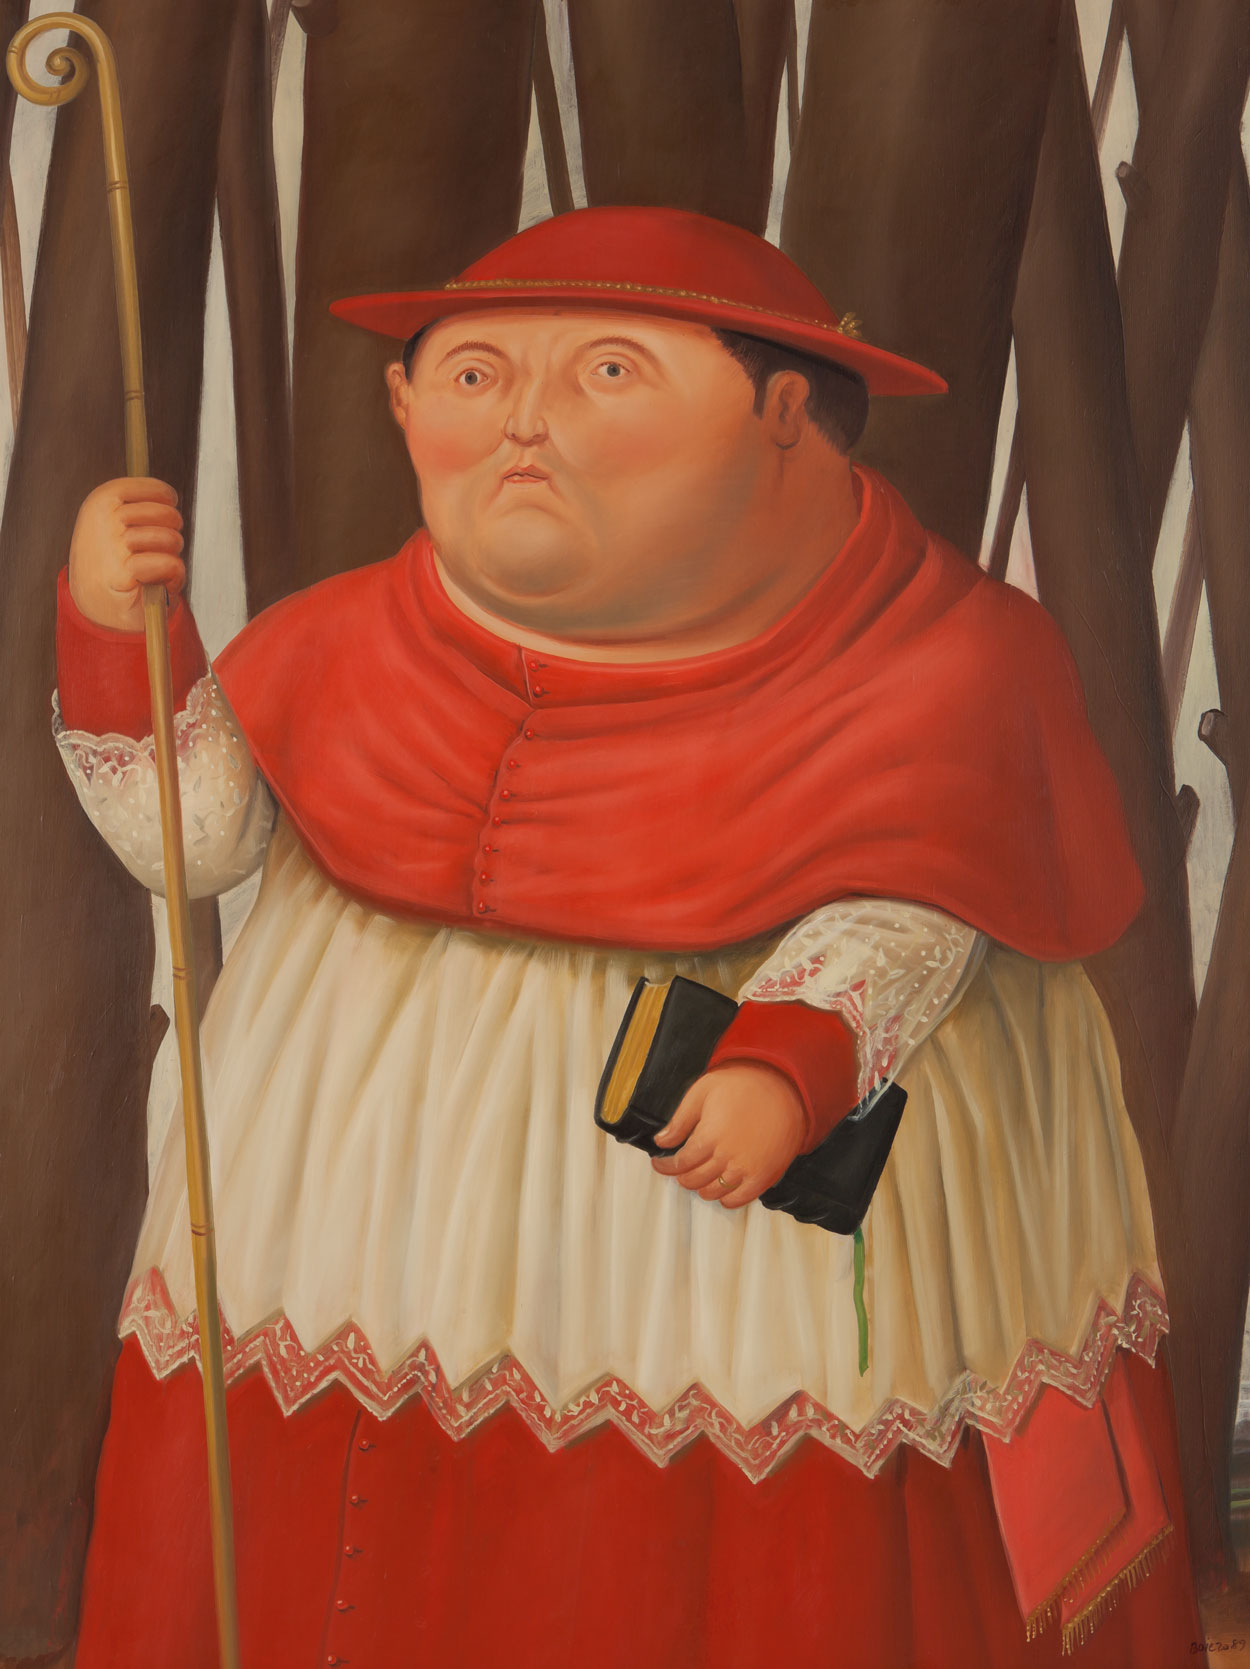 Virtuoso (Cardinale) by Fernando Botero - 1989 - 157 x 118 cm 